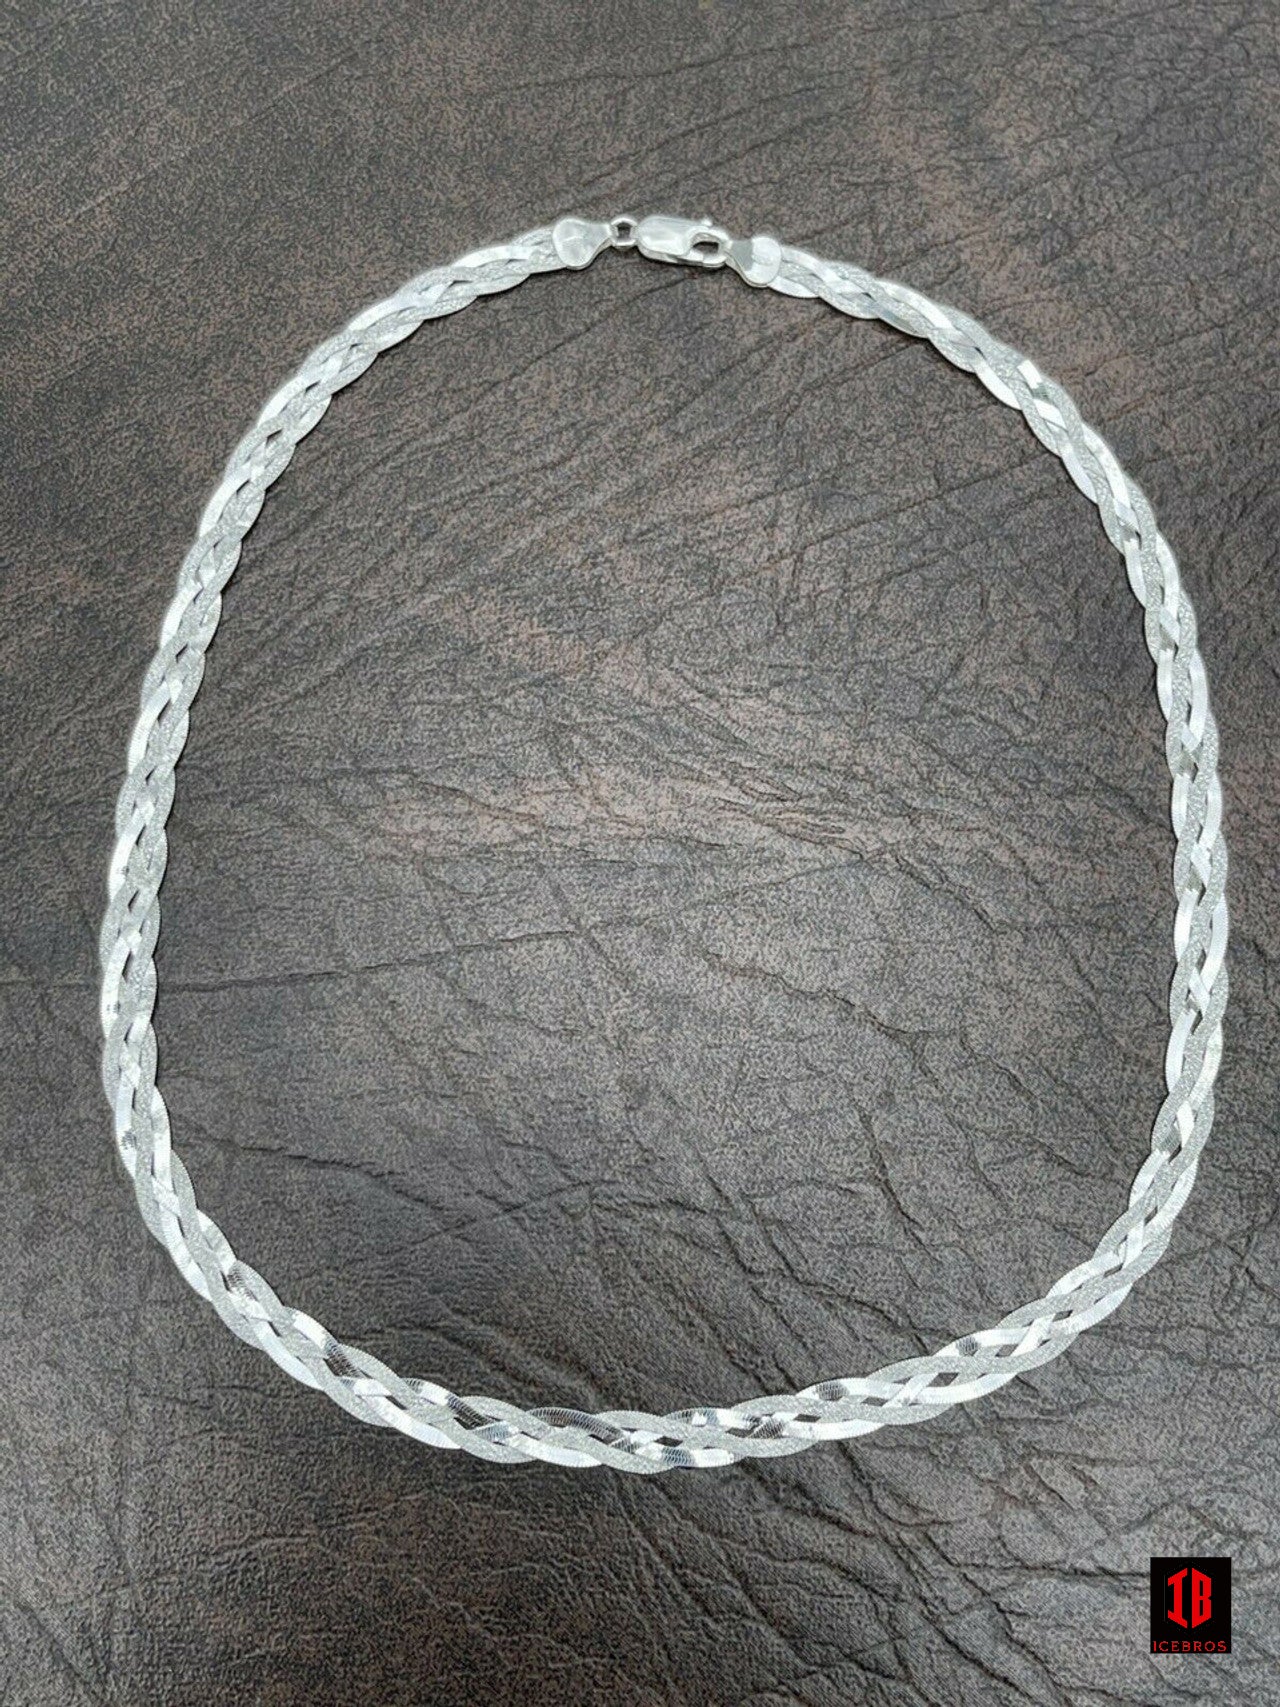 Ladies Solid 925 Sterling Silver Braided Herringbone Chain Necklace Diamond Cut